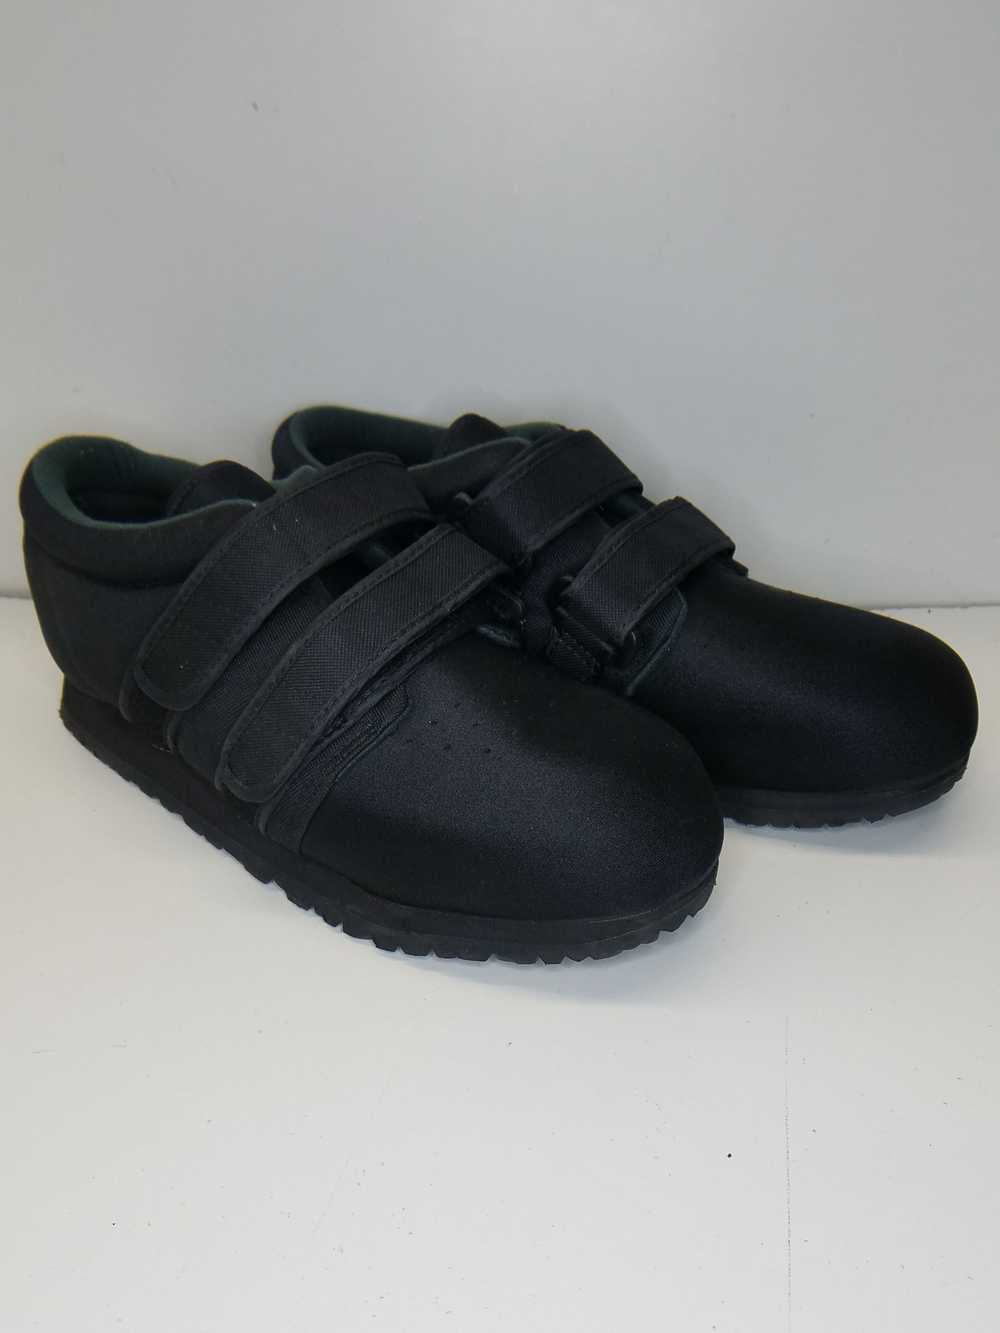 Pedors Classic MAX Neoprene Black Shoes Unisex Me… - image 3